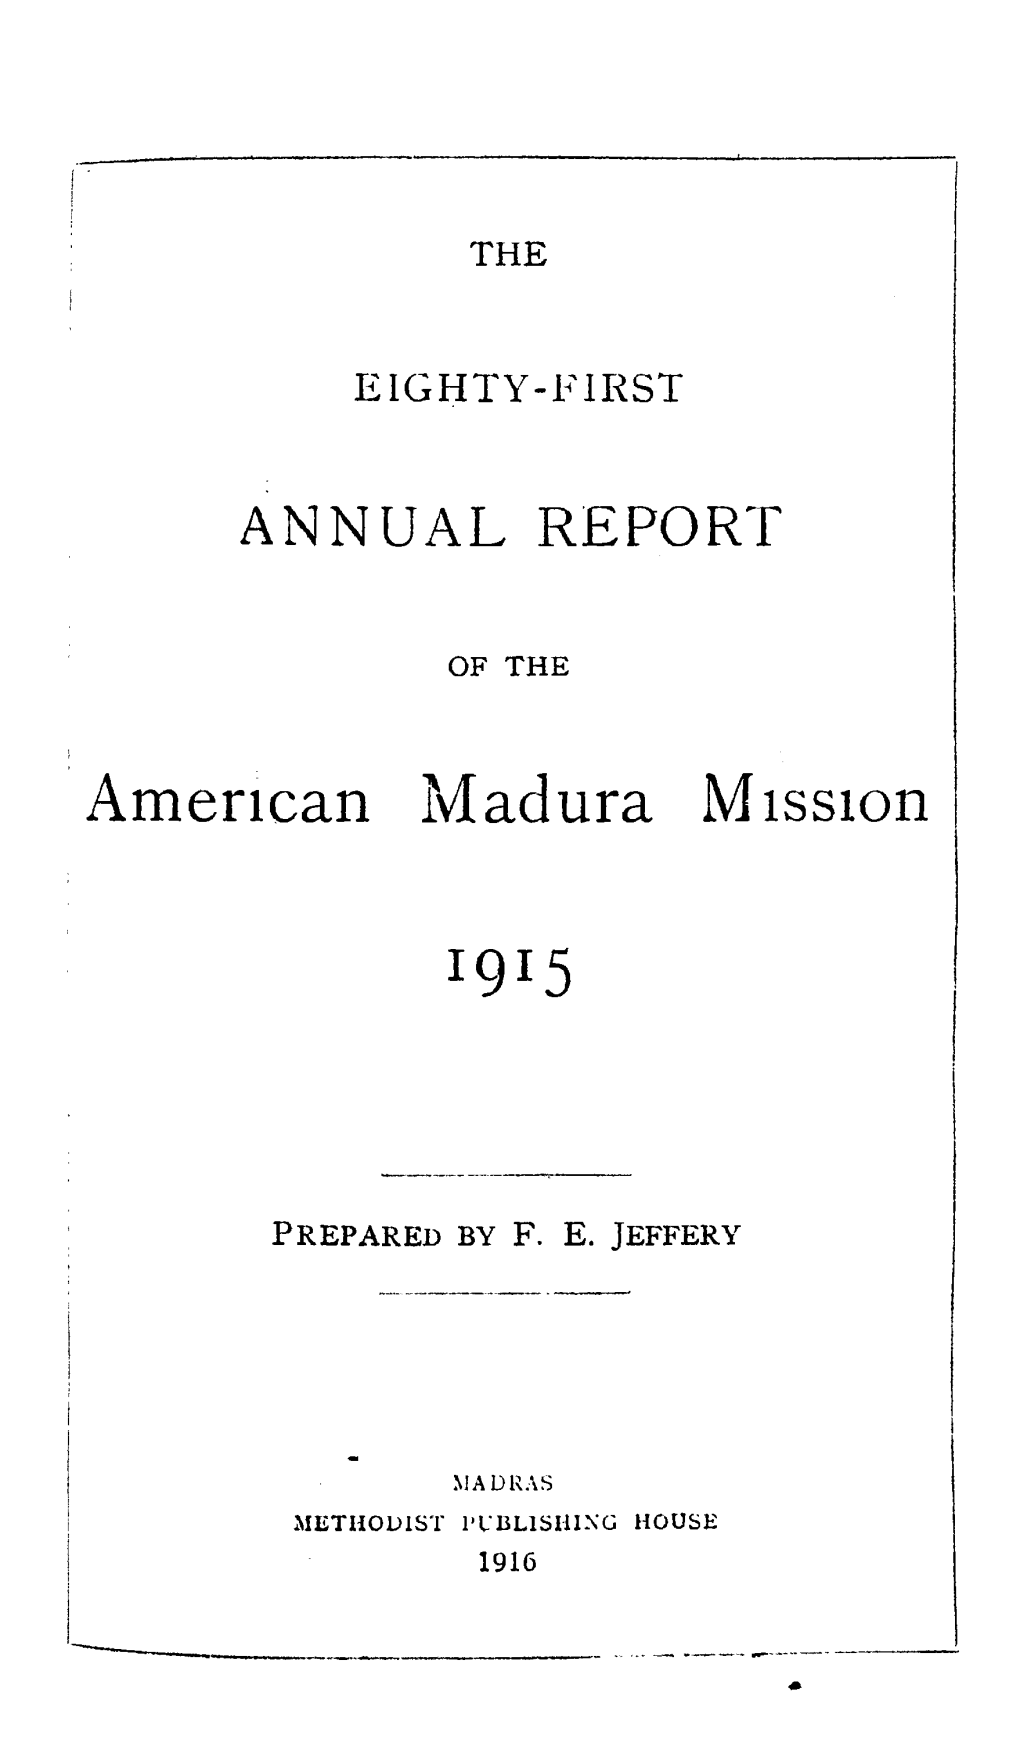 'American Madura Mission